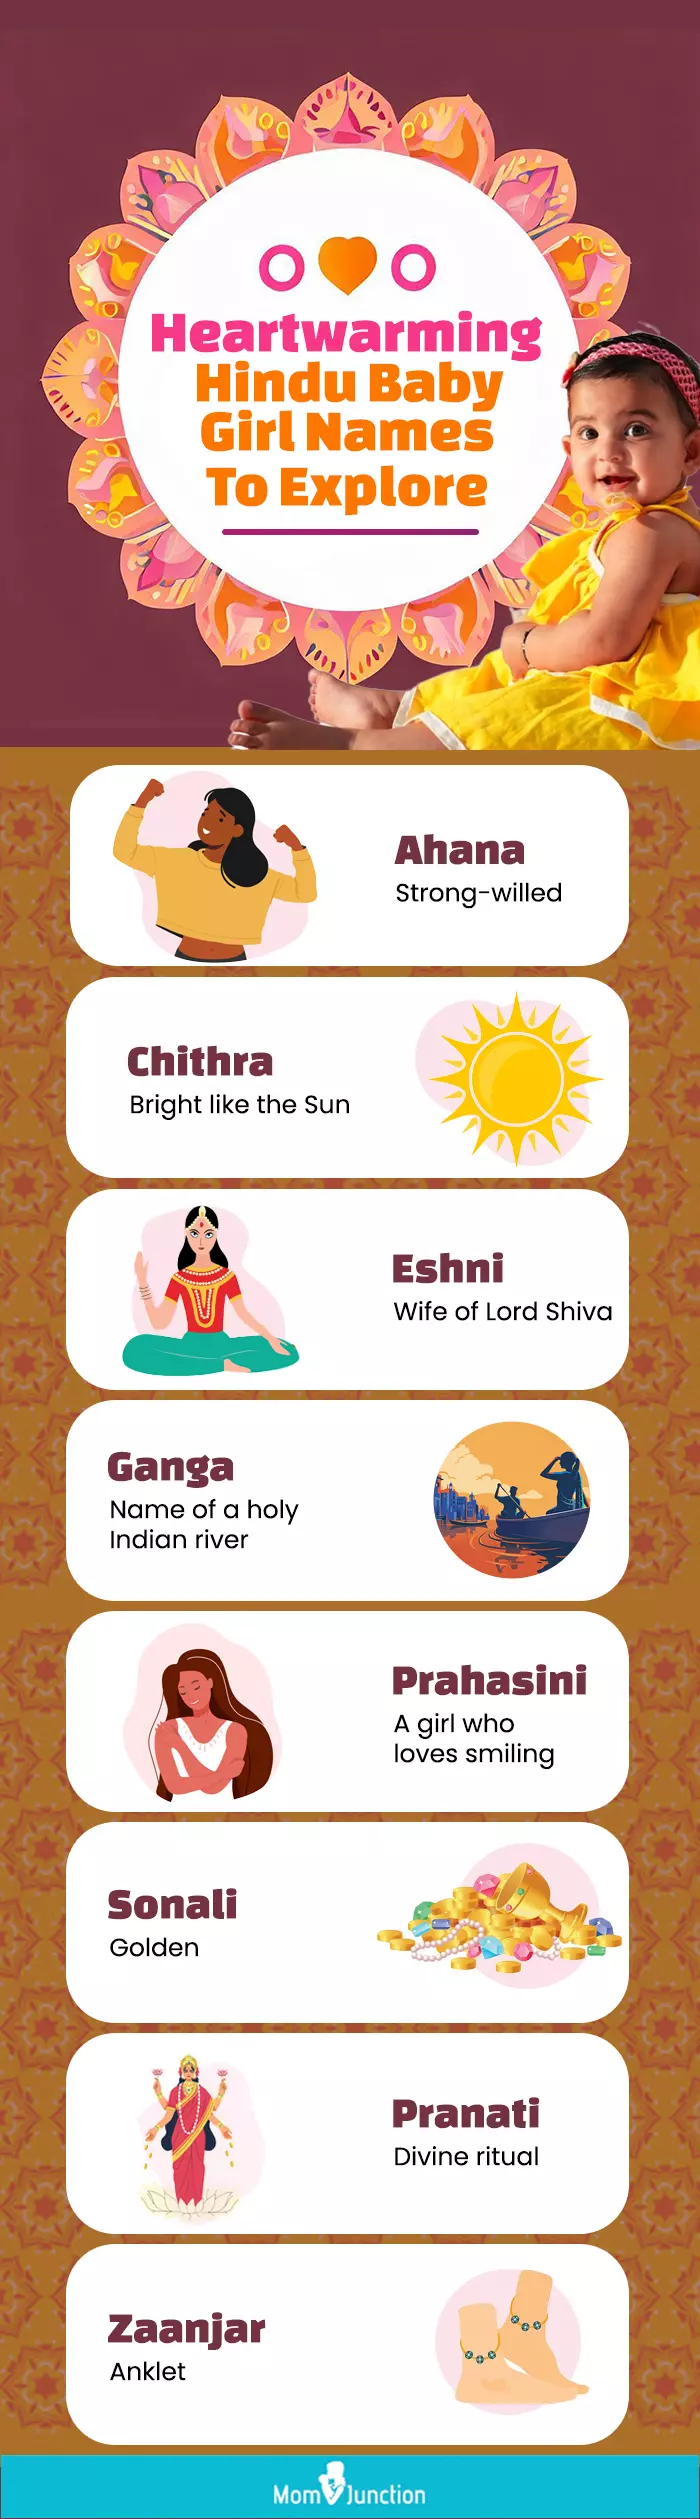 heartwarming hindu baby girl names to explore (infographic)